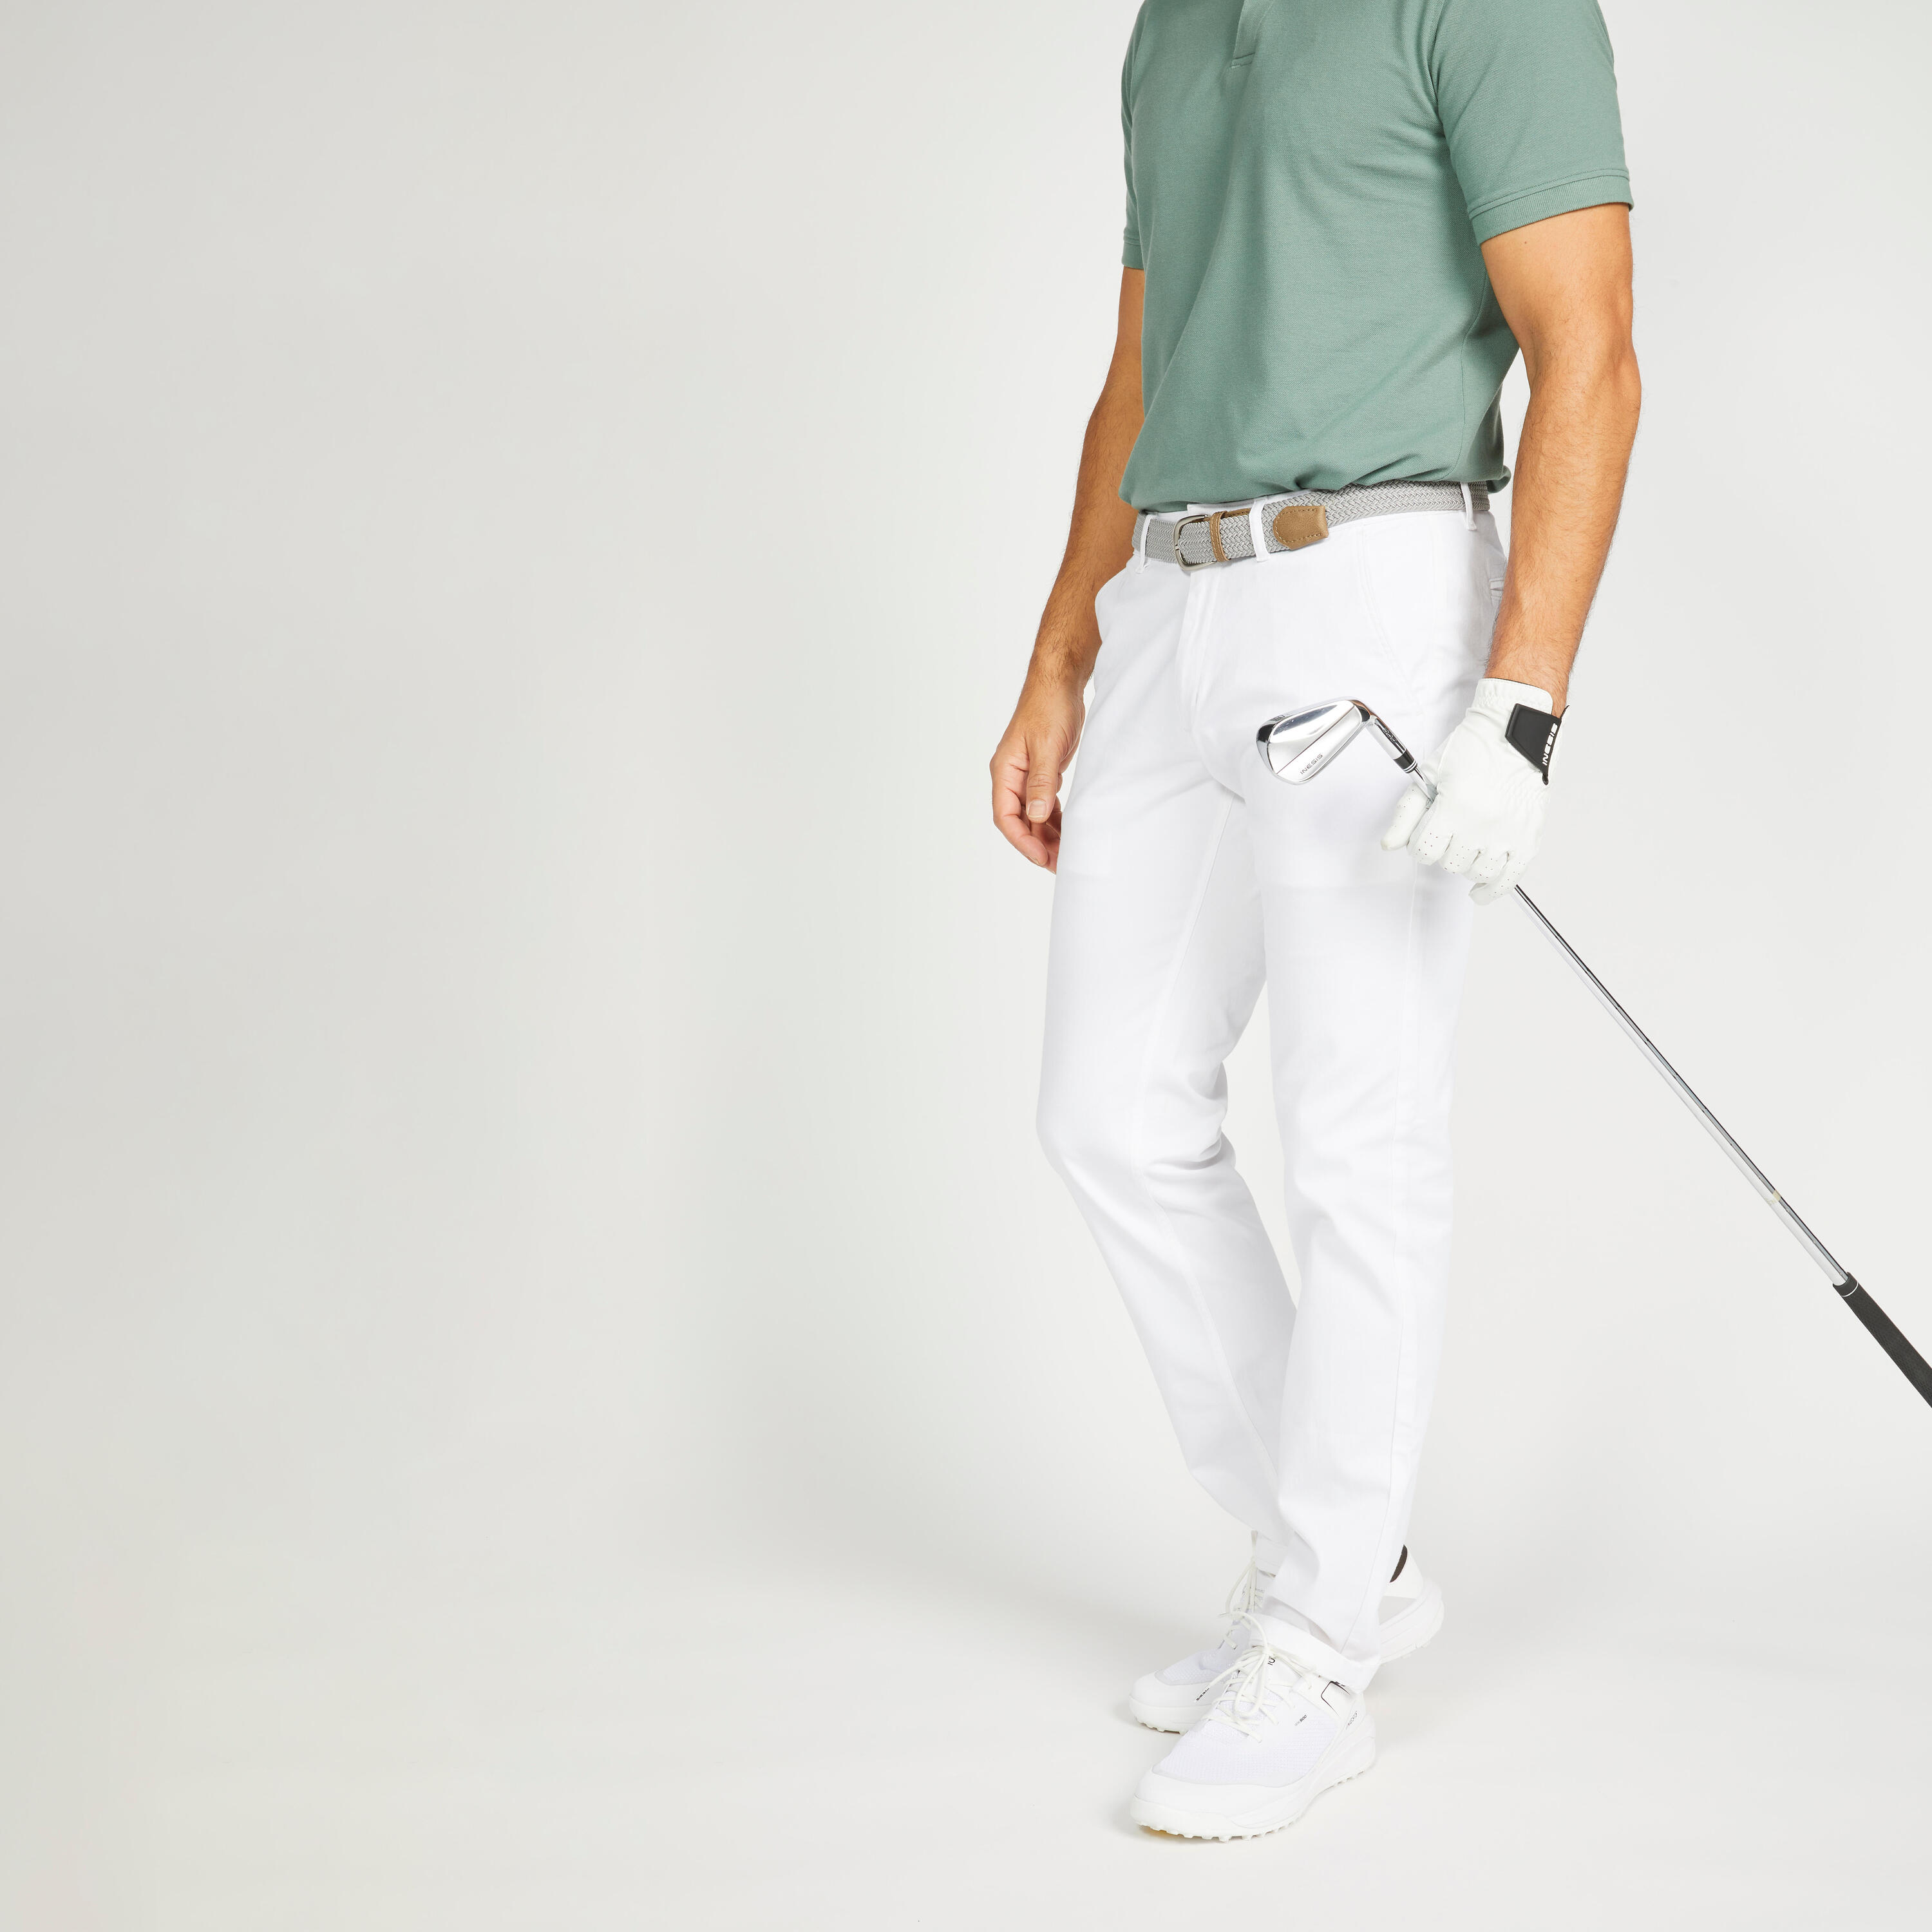 INESIS Men's golf trousers - MW500 white